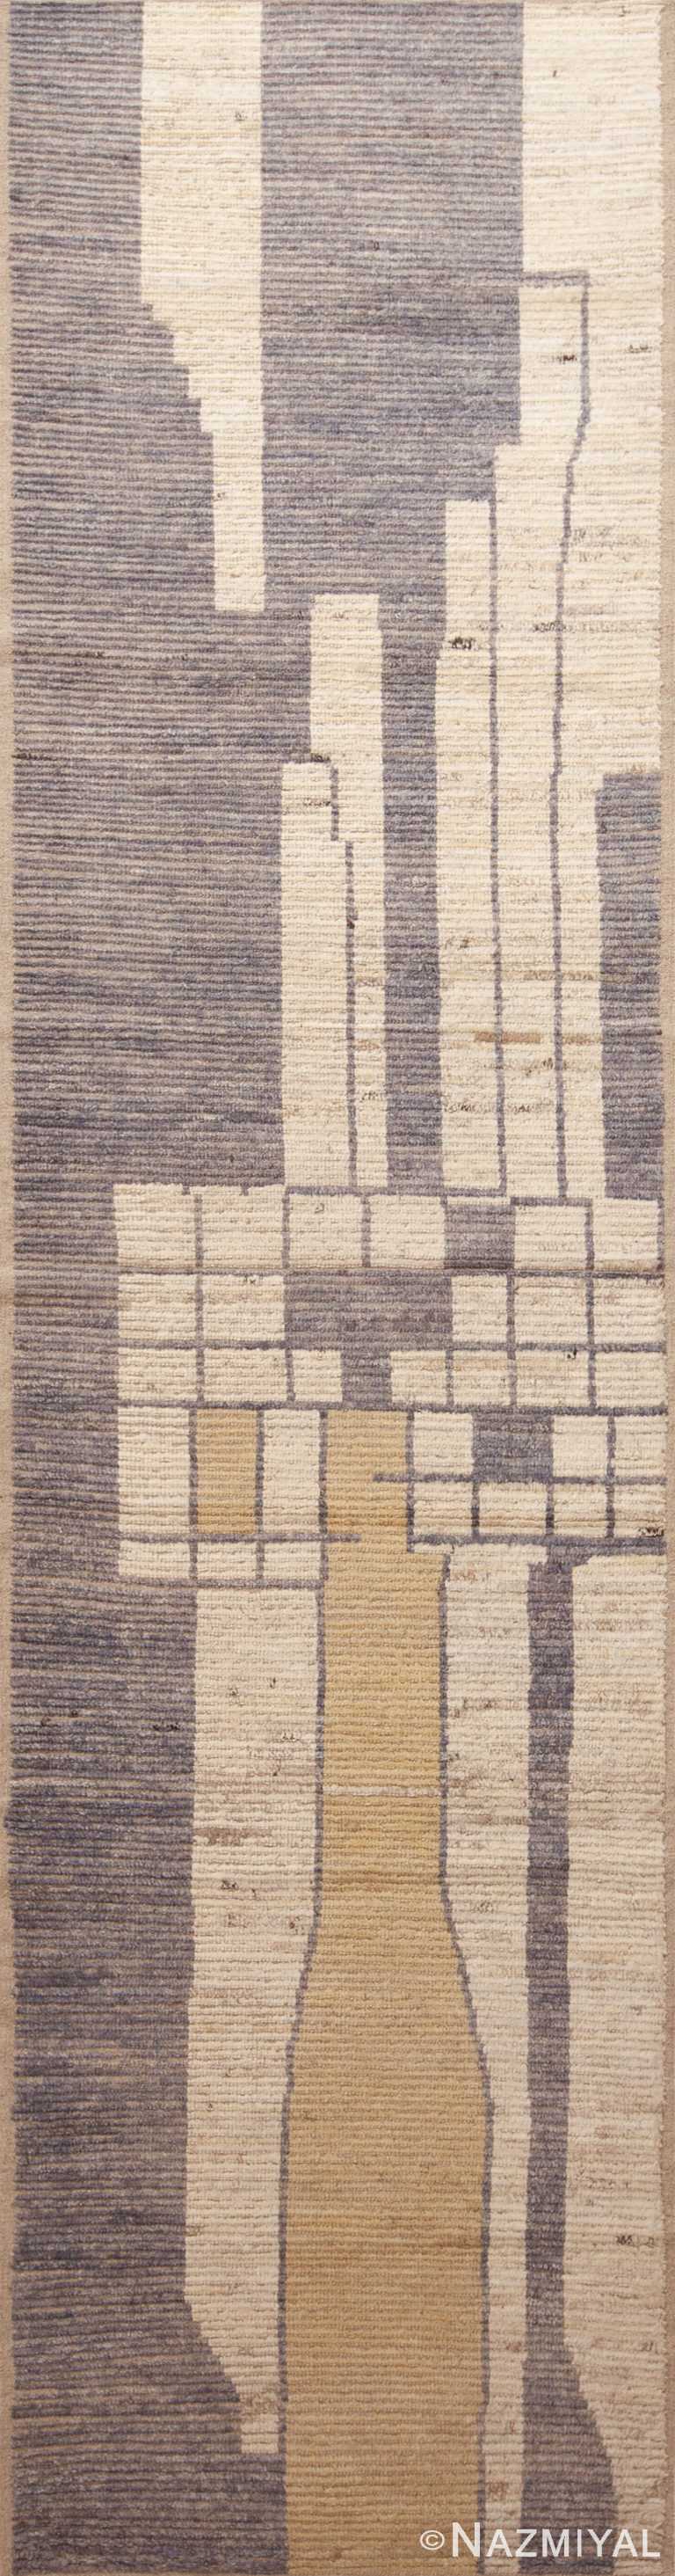 Artistic Tribal Geometric Neutral Color Modern Hallway Runner Rug 11176 by Nazmiyal Antique Rugs